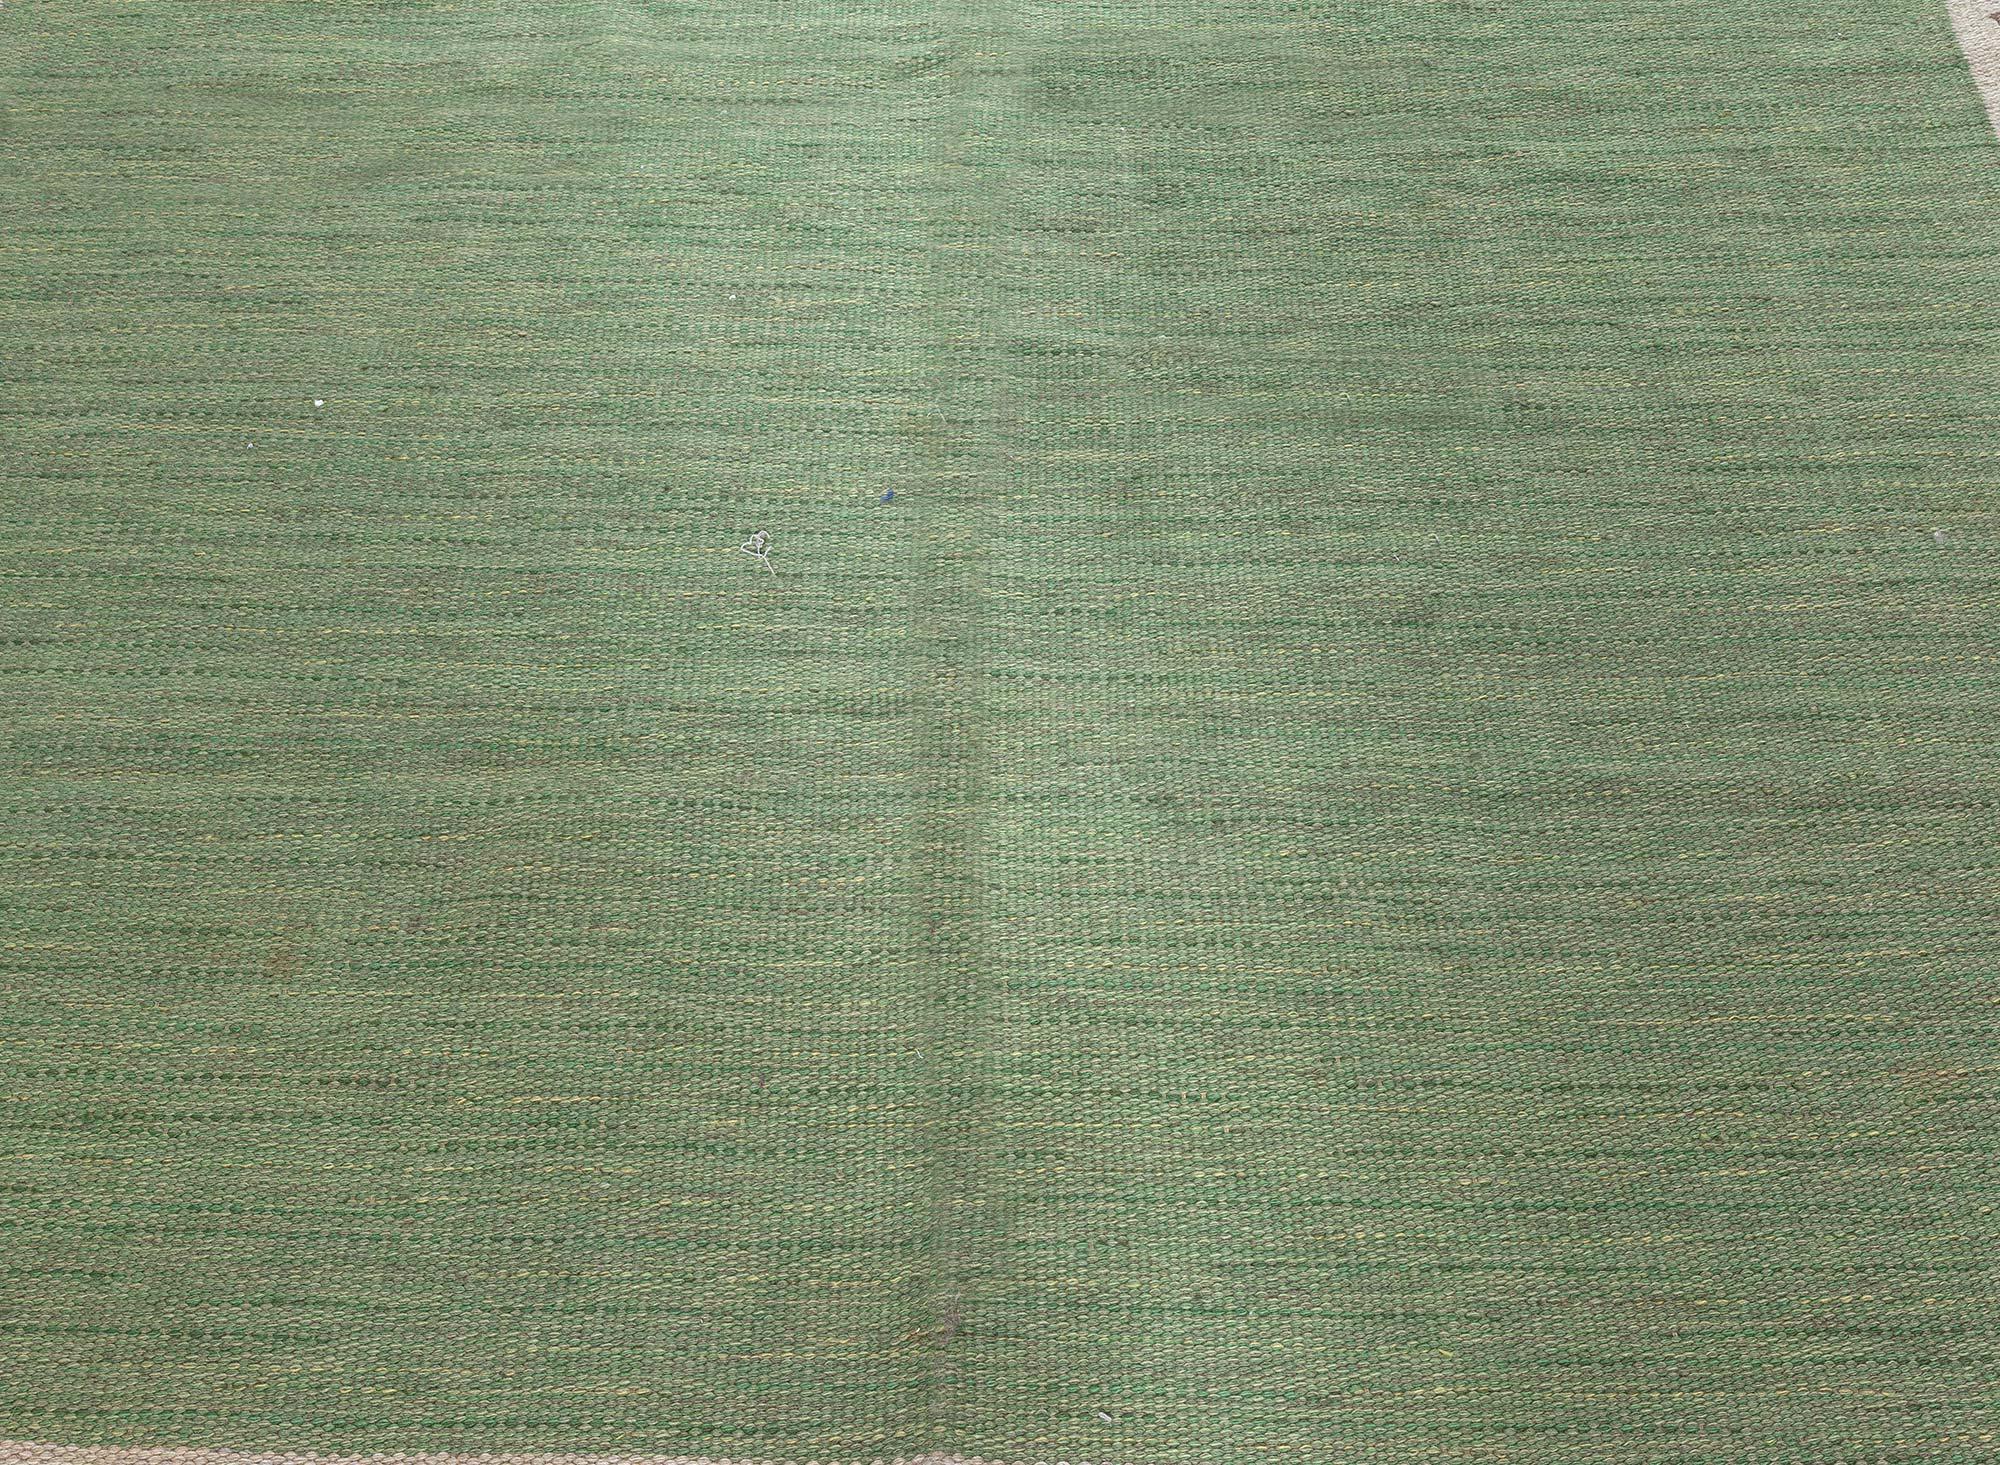 Mid-20th century Green Swedish flat-woven rug
Size: 6'7